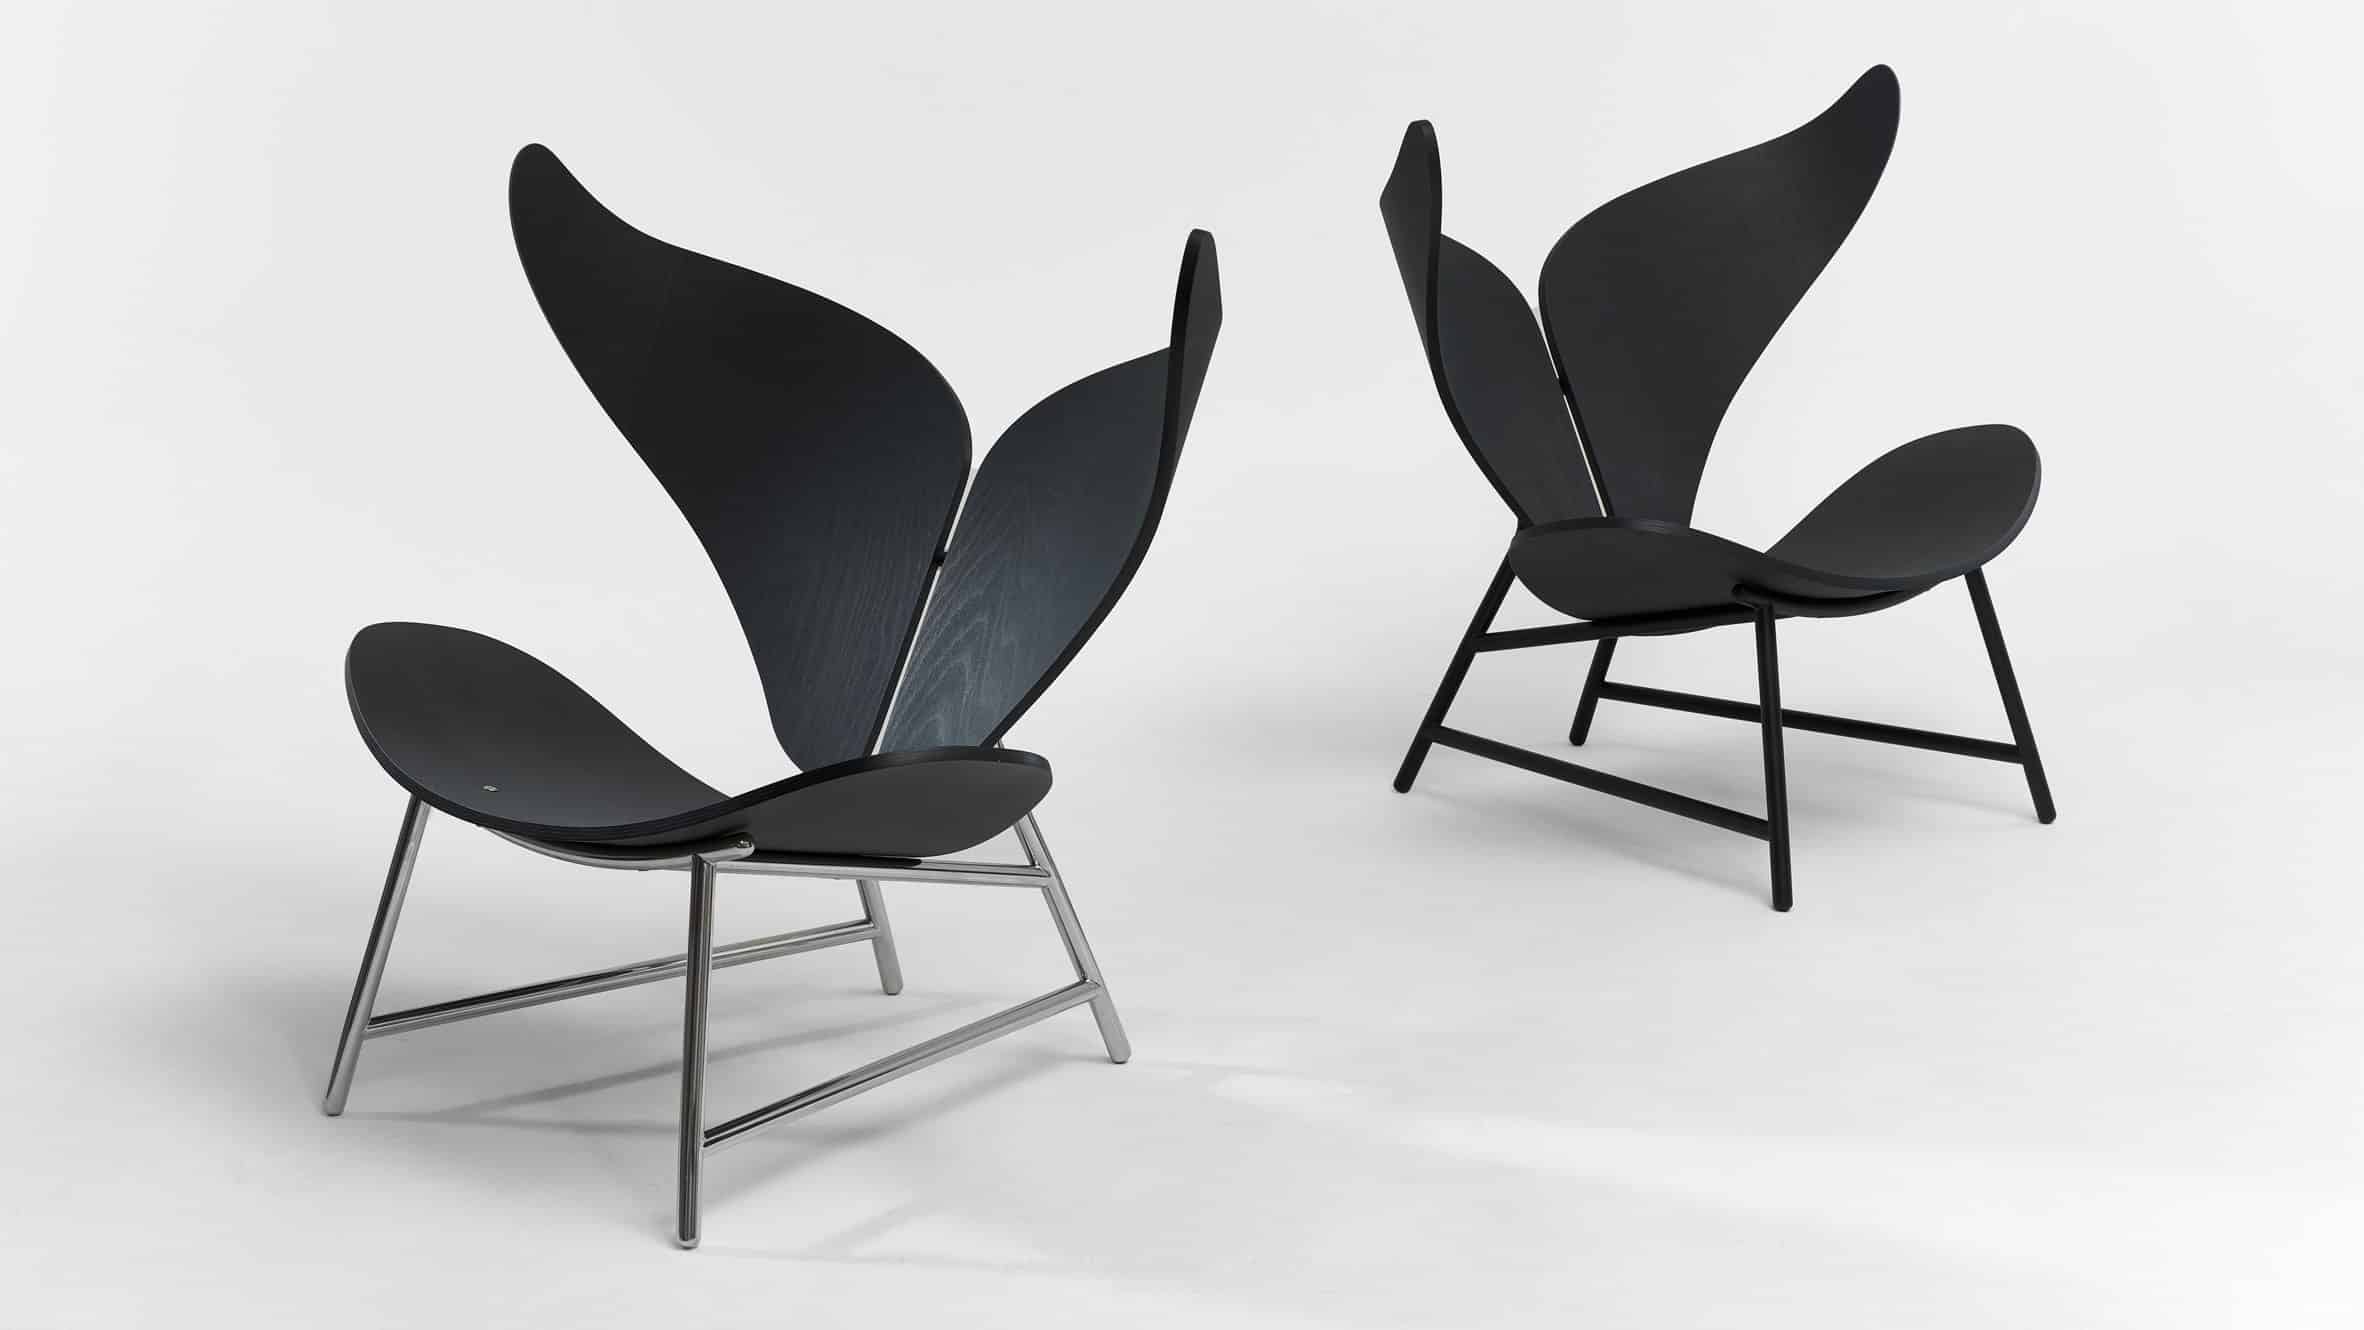 Woocheol Shin mimics a whale’s tail to create a plywood chair